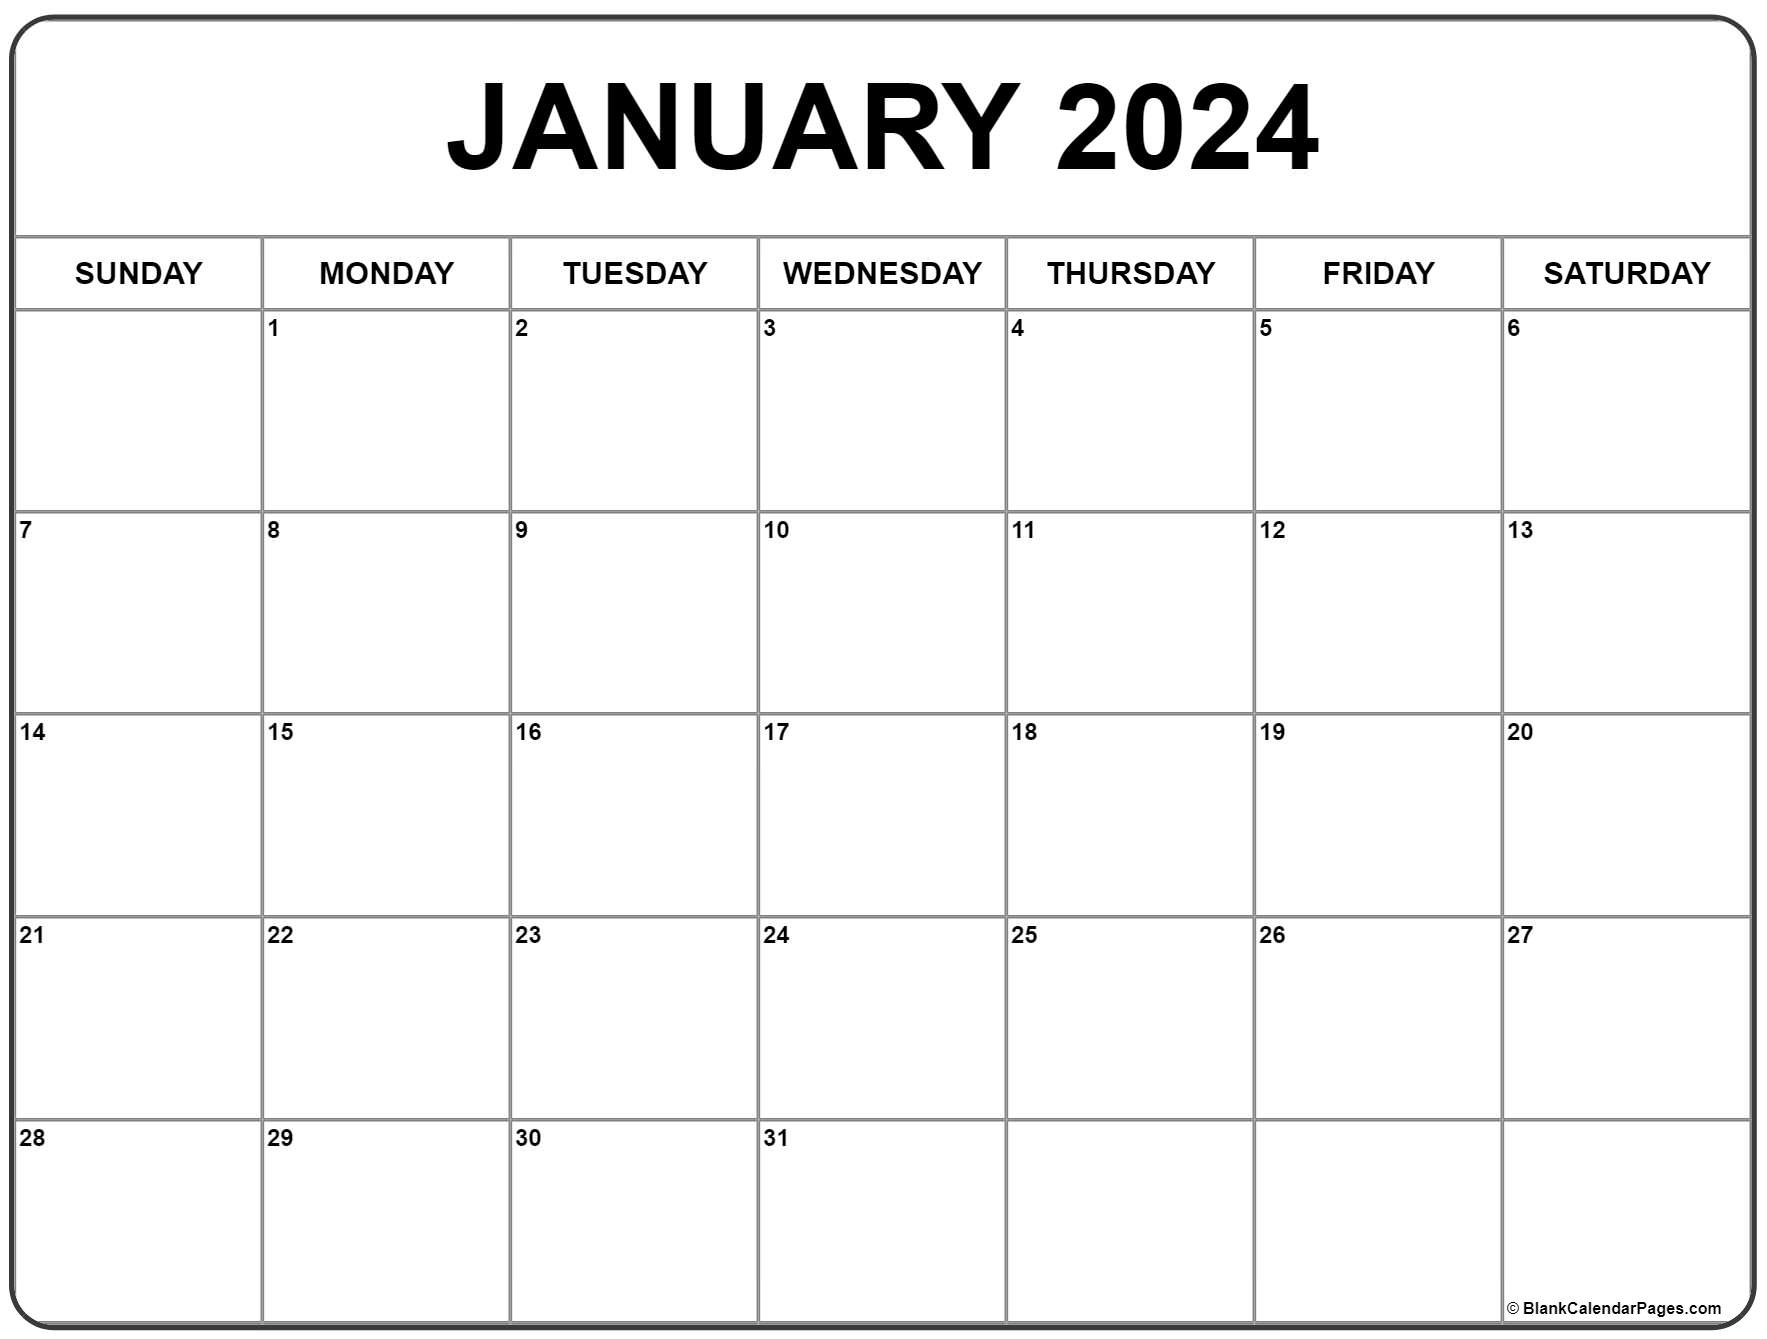 January 2024 Calendar | Free Printable Calendar for January 2024 Blank Calendar Printable